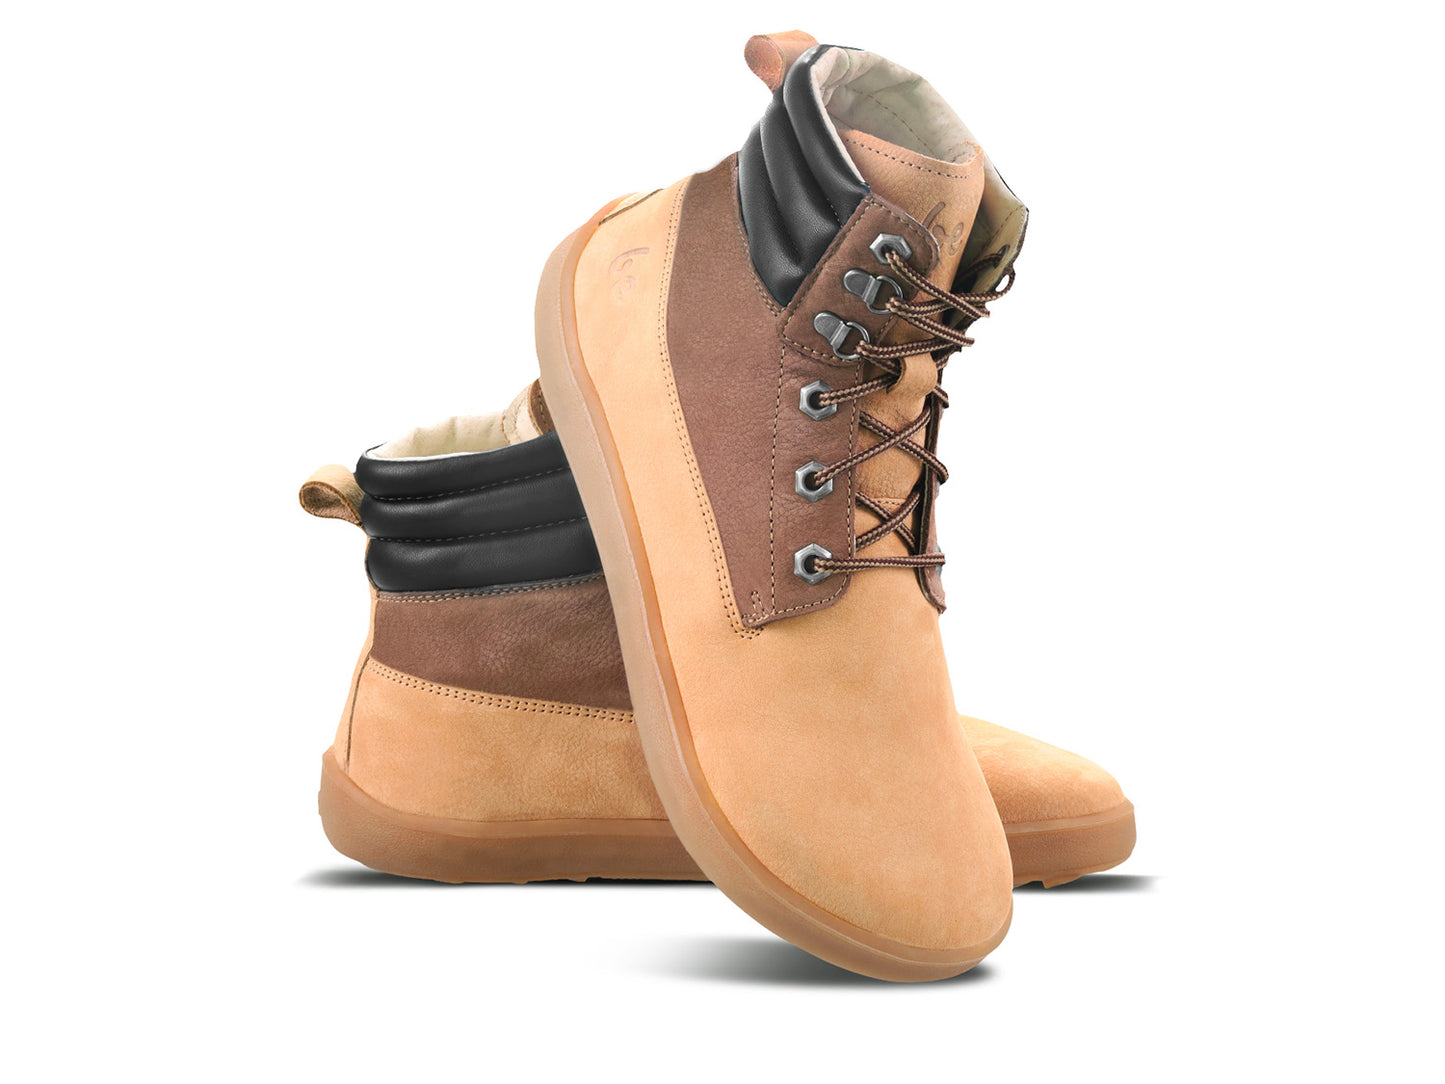 Barefoot Boots Be Lenka Nevada Neo - Sand & Dark Brown 2 OzBarefoot Australia